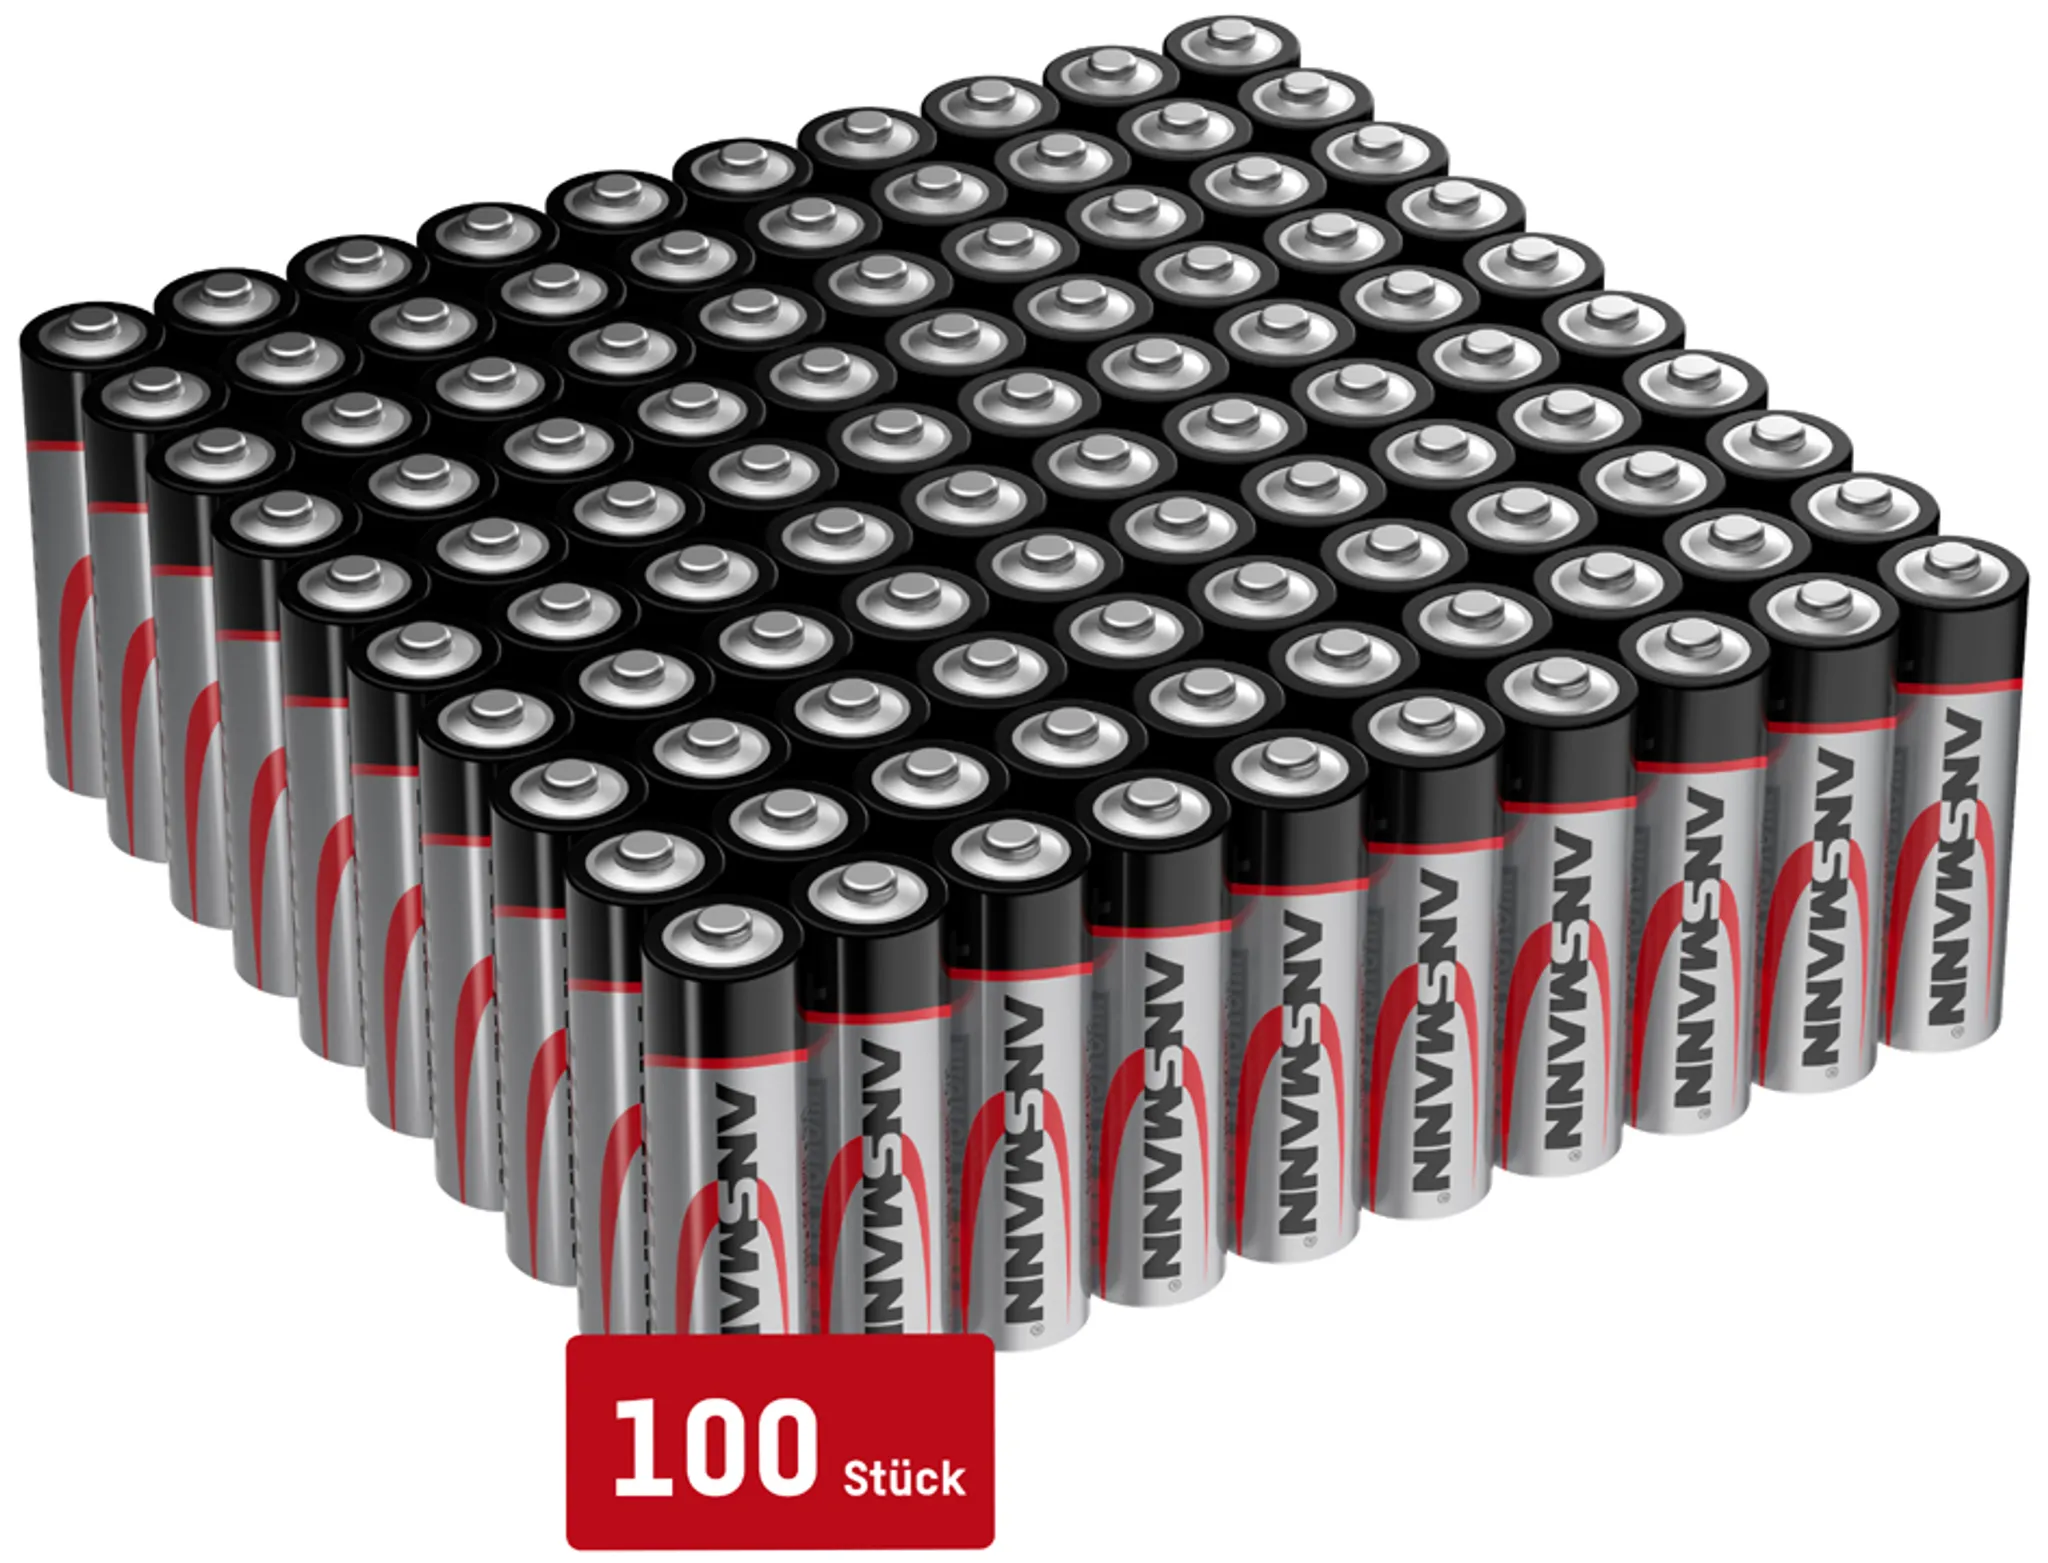 INTENSO Micro-Batterie Energy Ultra, AAA LR03, 100 Stück online kaufen